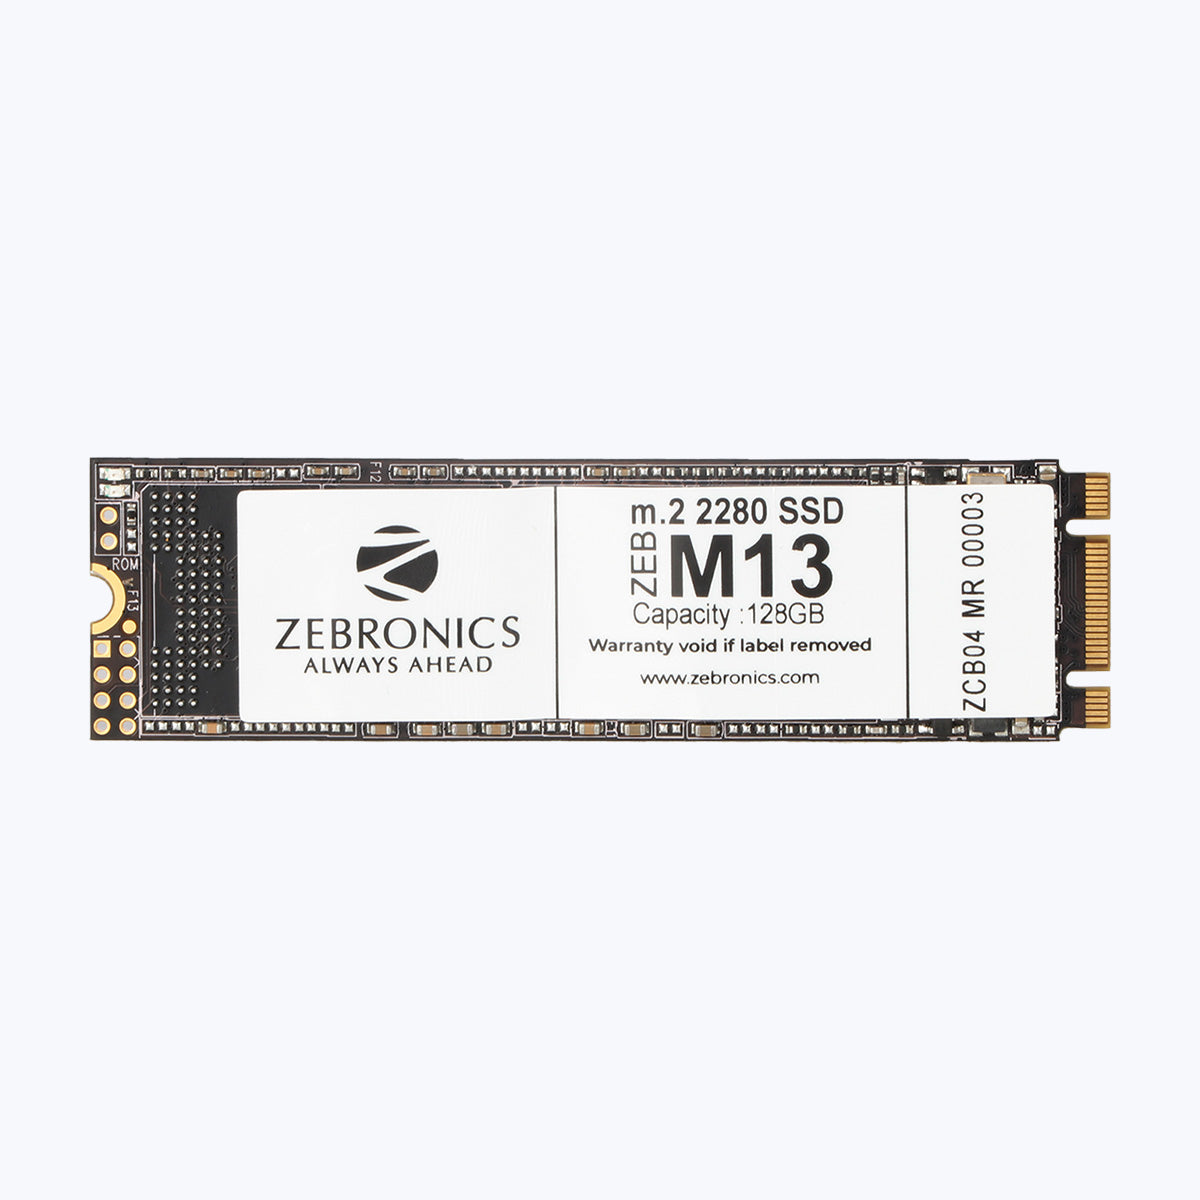 ZEB-M13 - SSD - Zebrronics